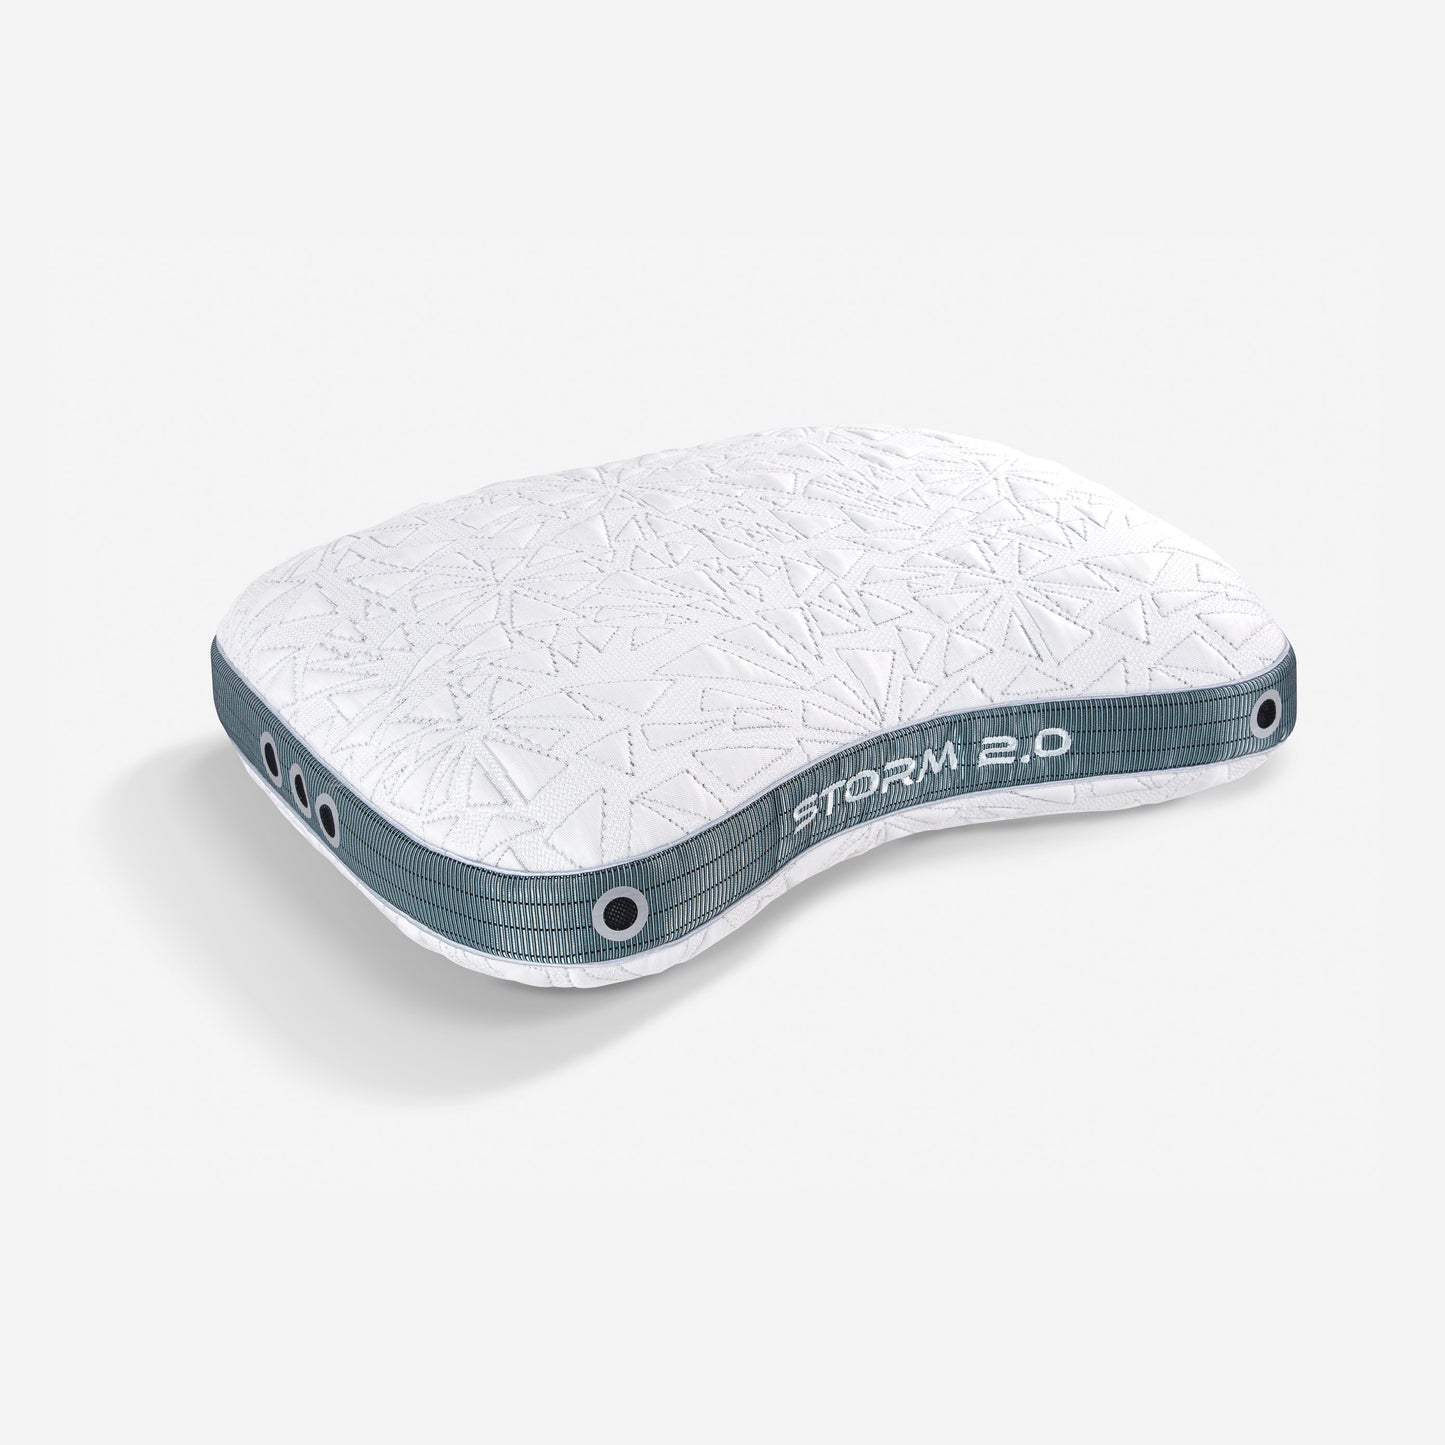 Bedgear Storm Cuddle Curve Performance Pillow - Image 2